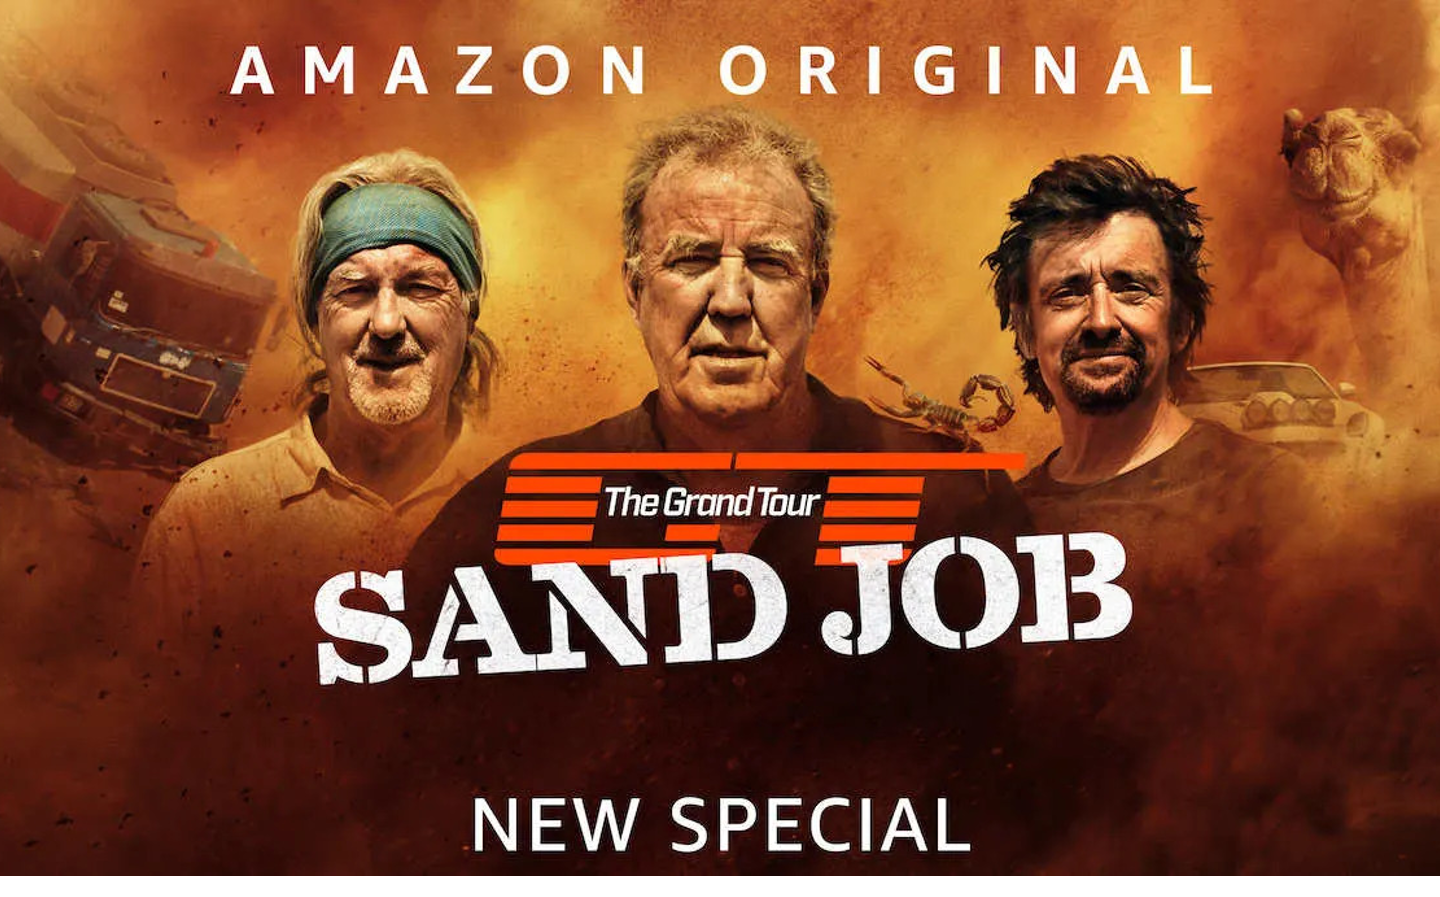 Grand-tour-sand-job.png